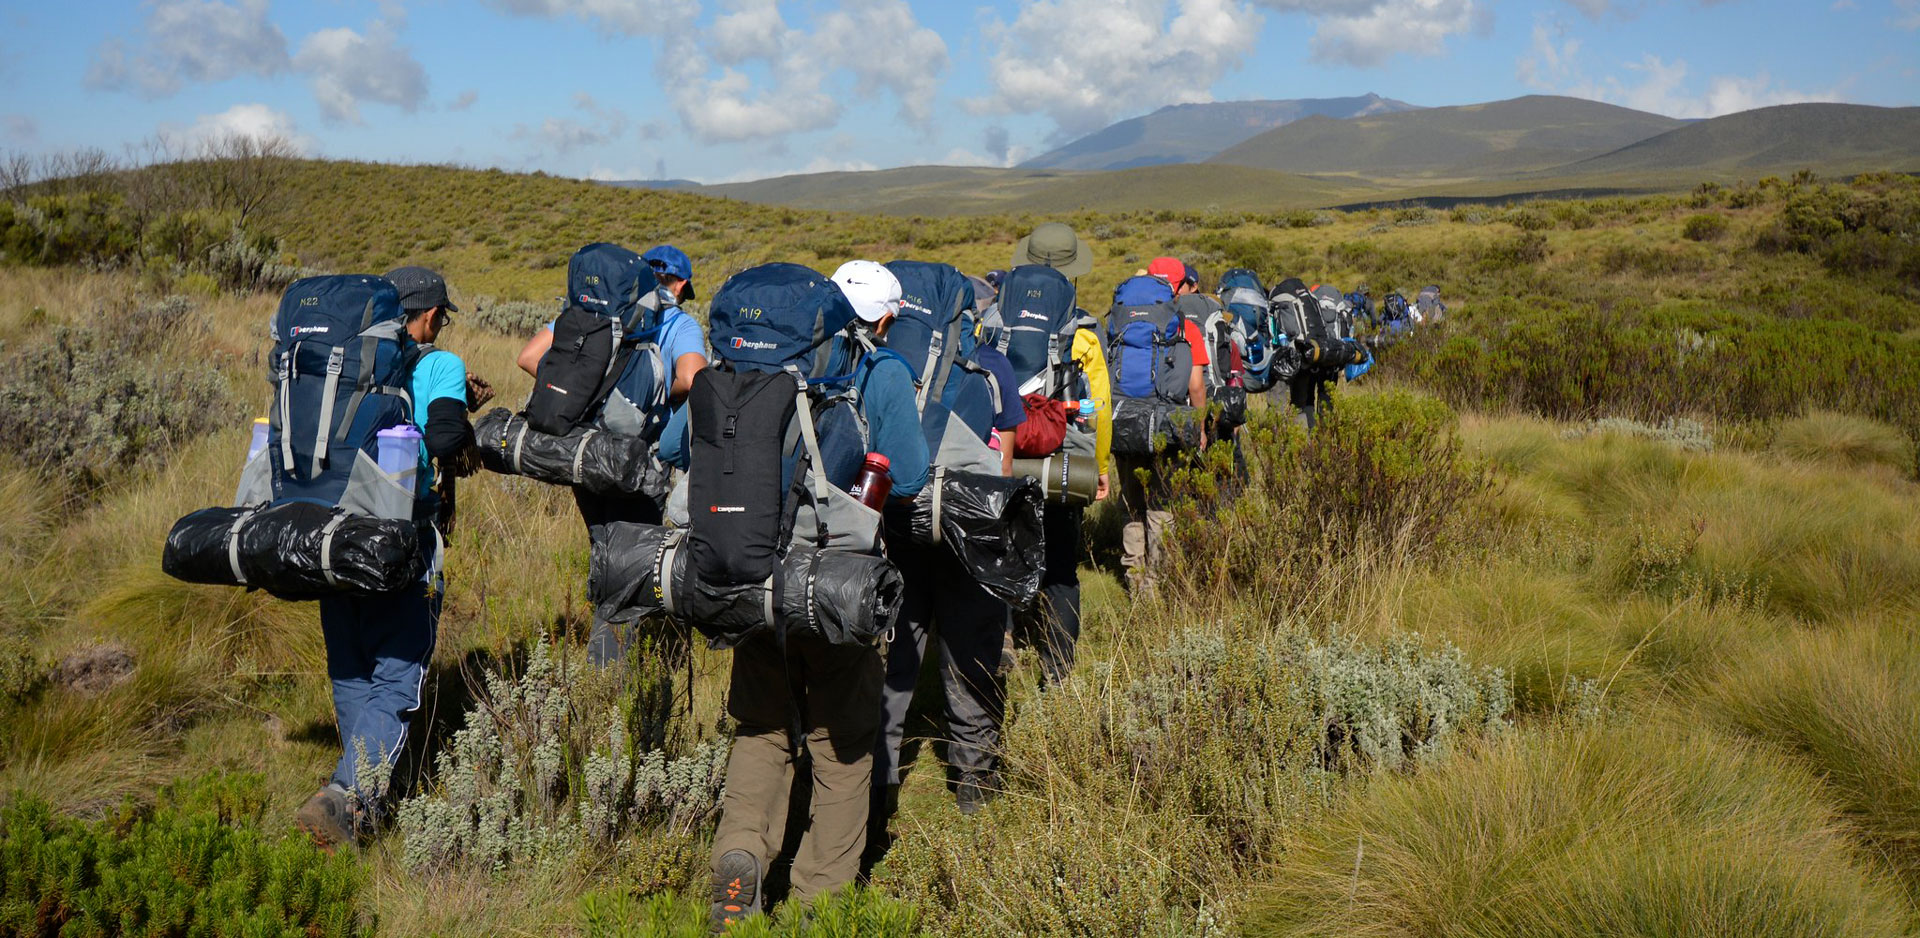 Mount Kenya, Mount Meru & Mount Kilimanjaro (3 Peaks – 3 Weeks)